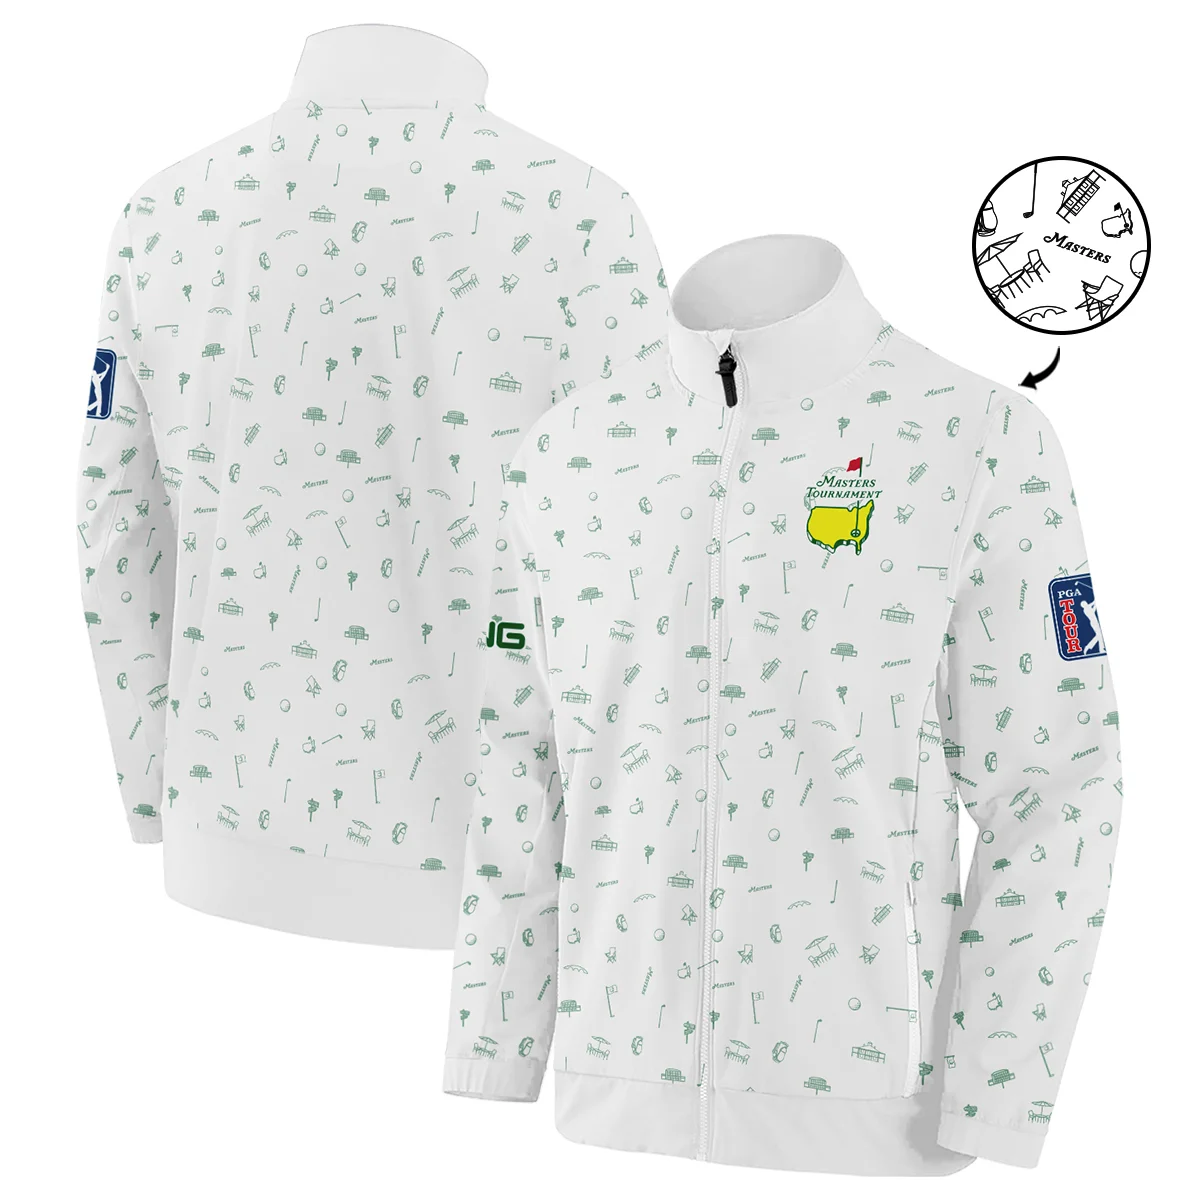 Golf Masters Tournament Ping Unisex Sweatshirt Augusta Icons Pattern White Green Golf Sports All Over Print Sweatshirt